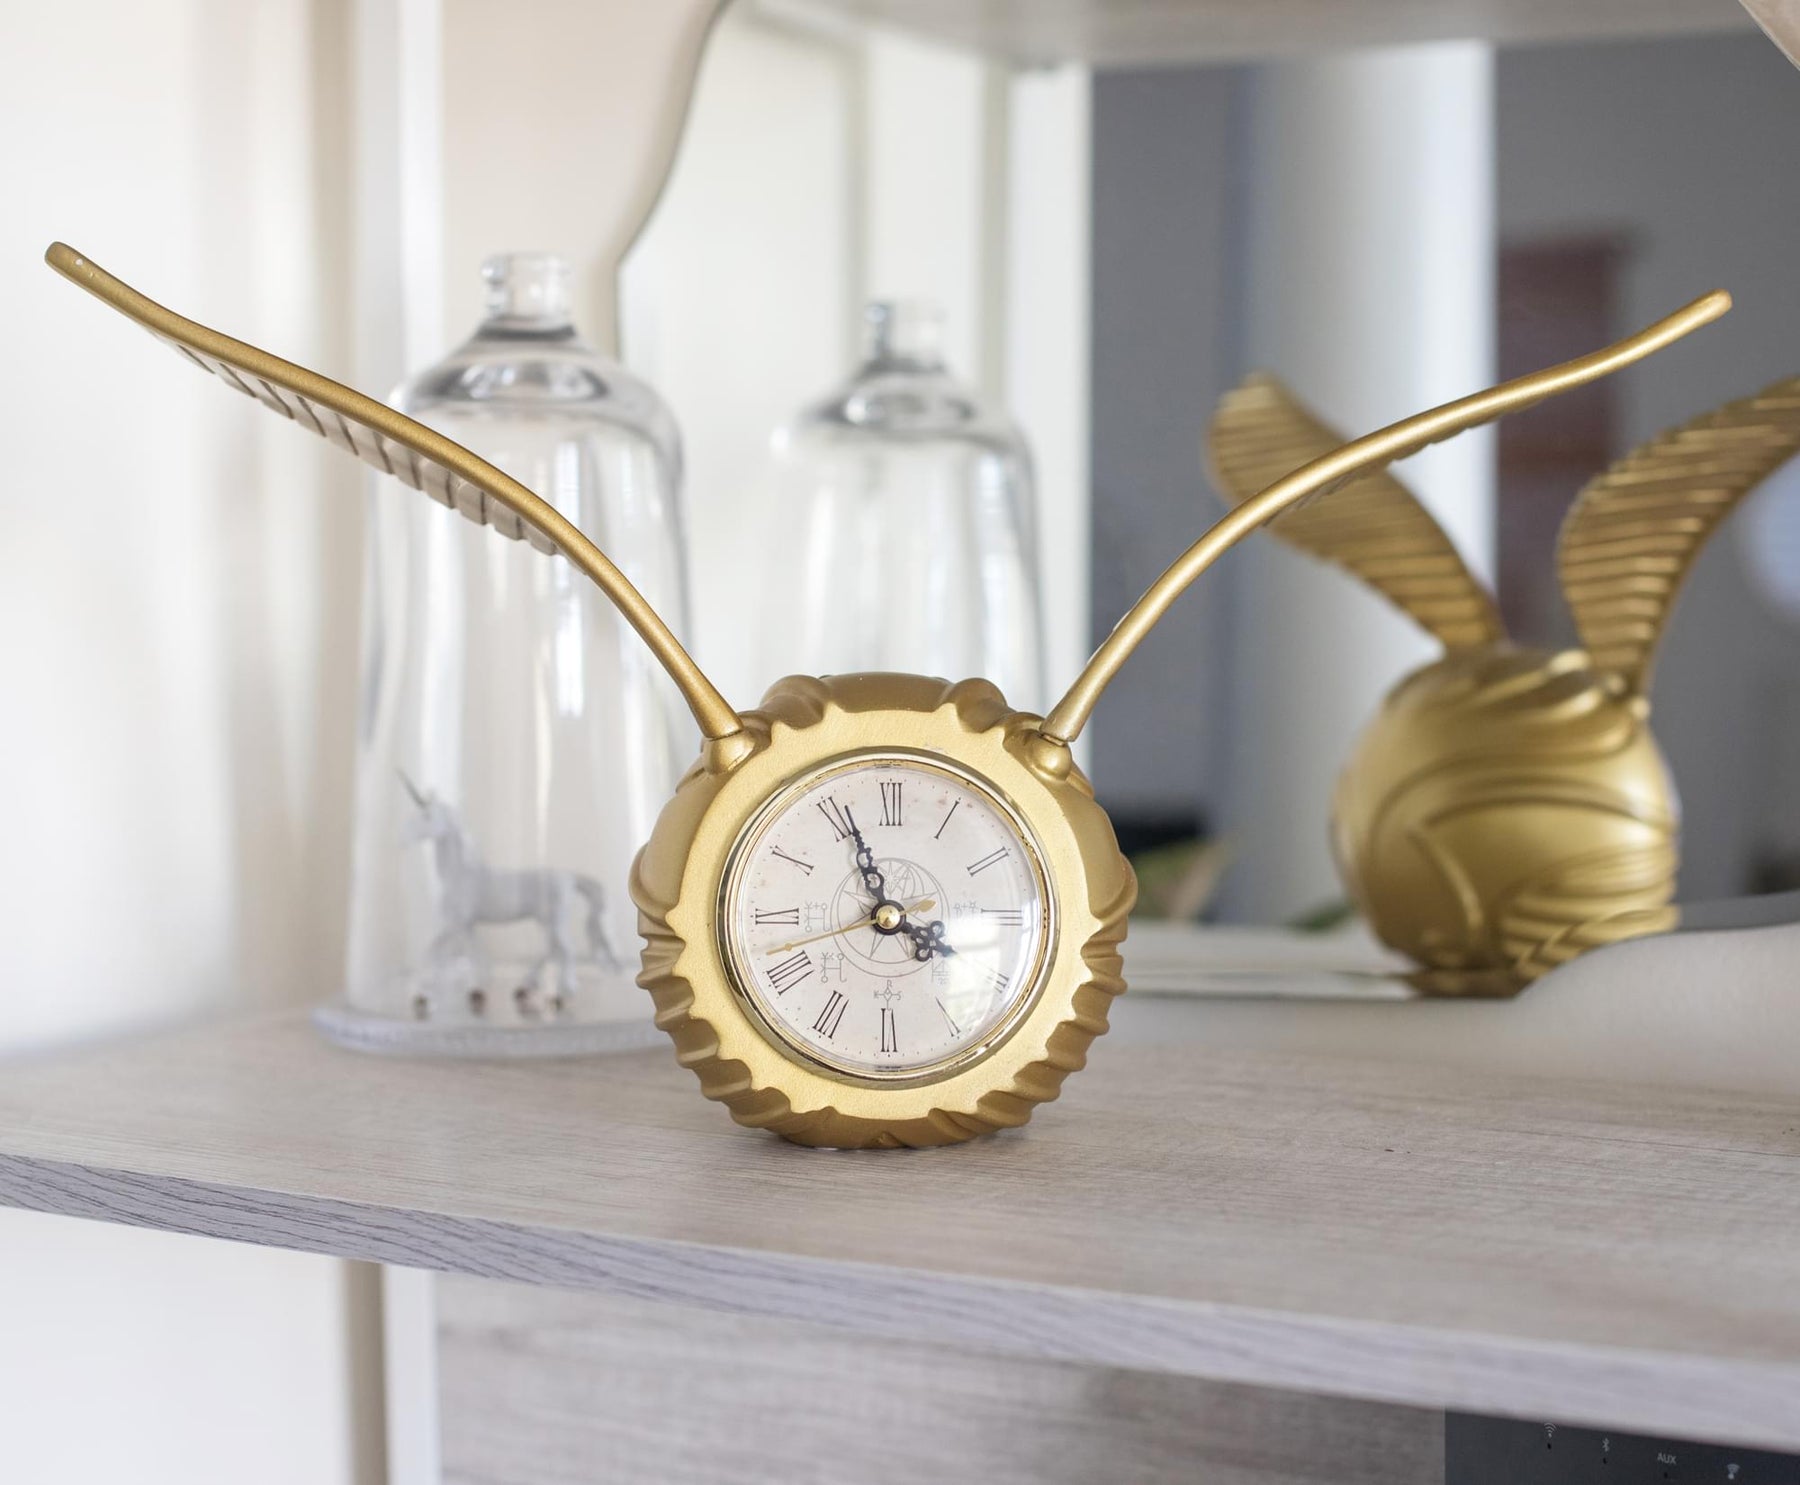 Harry Potter Golden Snitch Replica Resin Desk Clock | 9 x 18 Inches